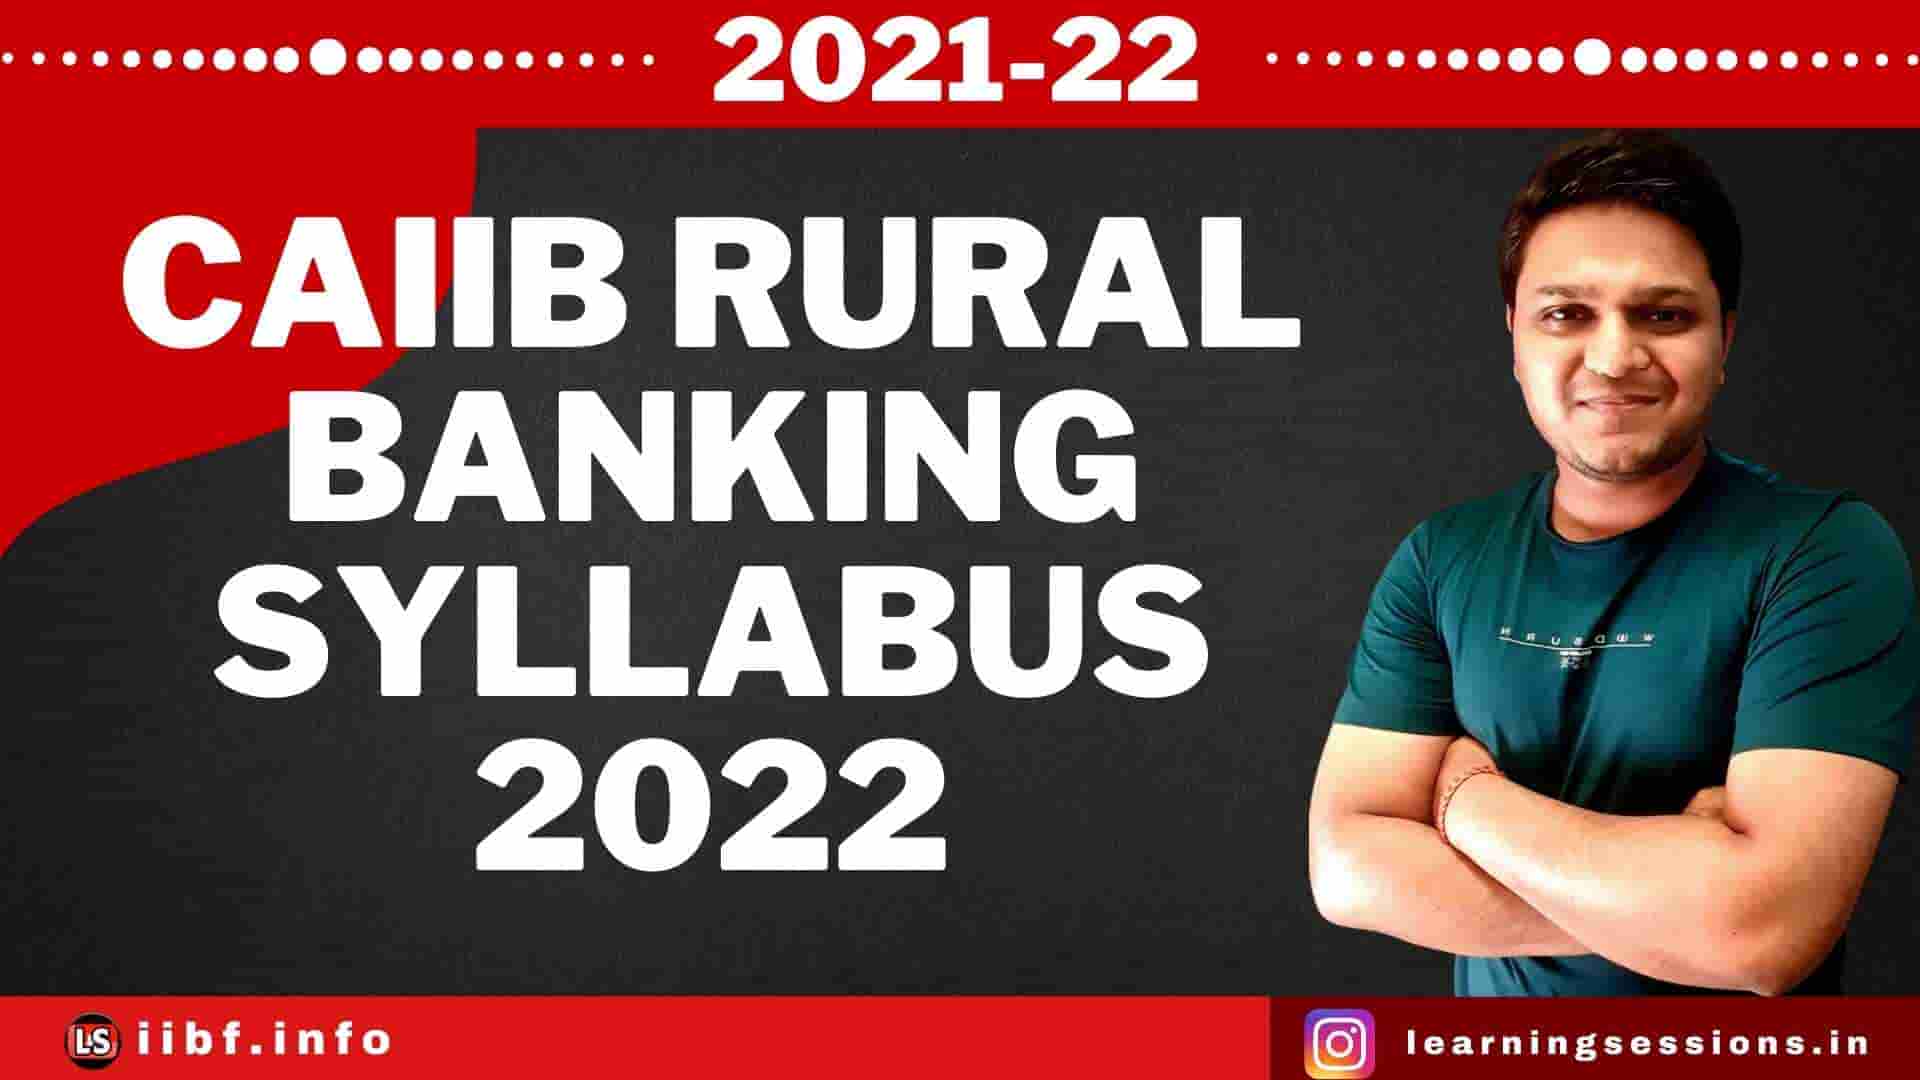 CAIIB RURAL BANKING SYLLABUS 2022